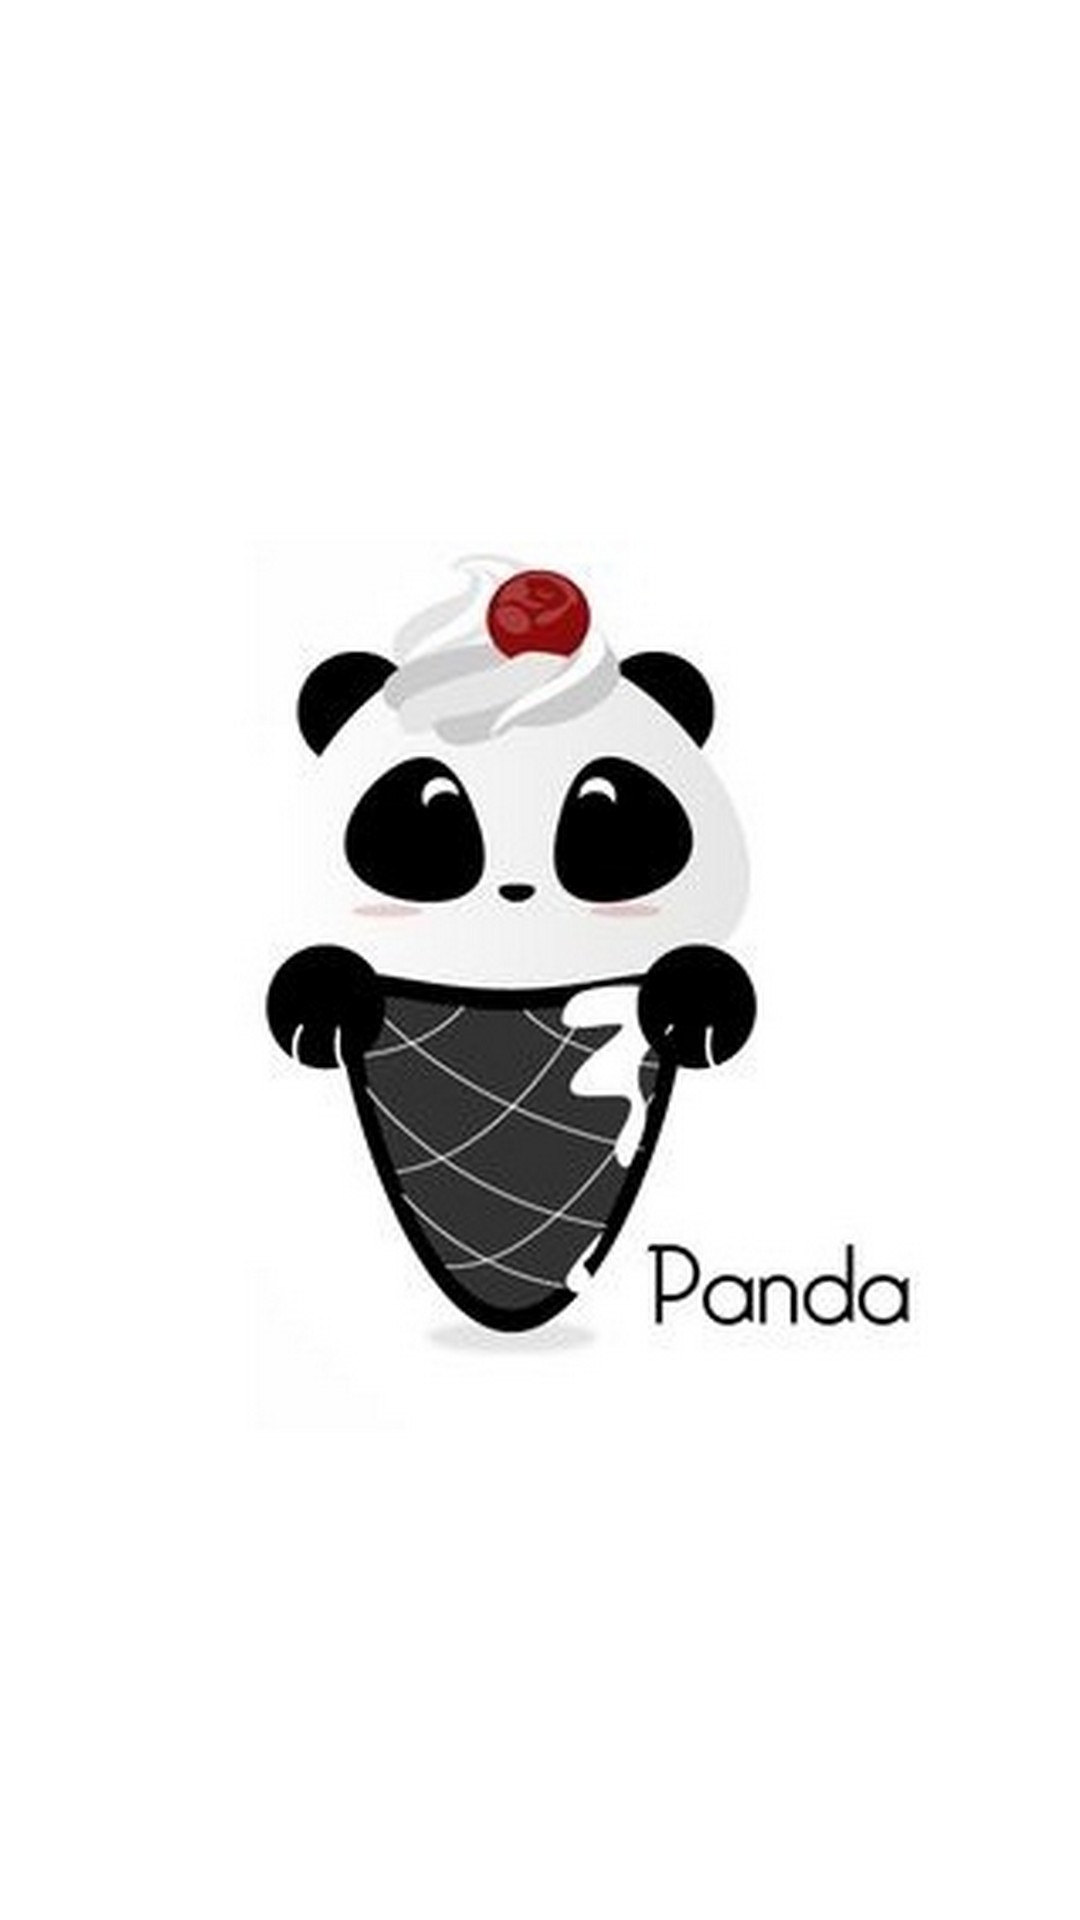 Cute Panda Drawing iPhone Wallpaper resolution 1080x1920